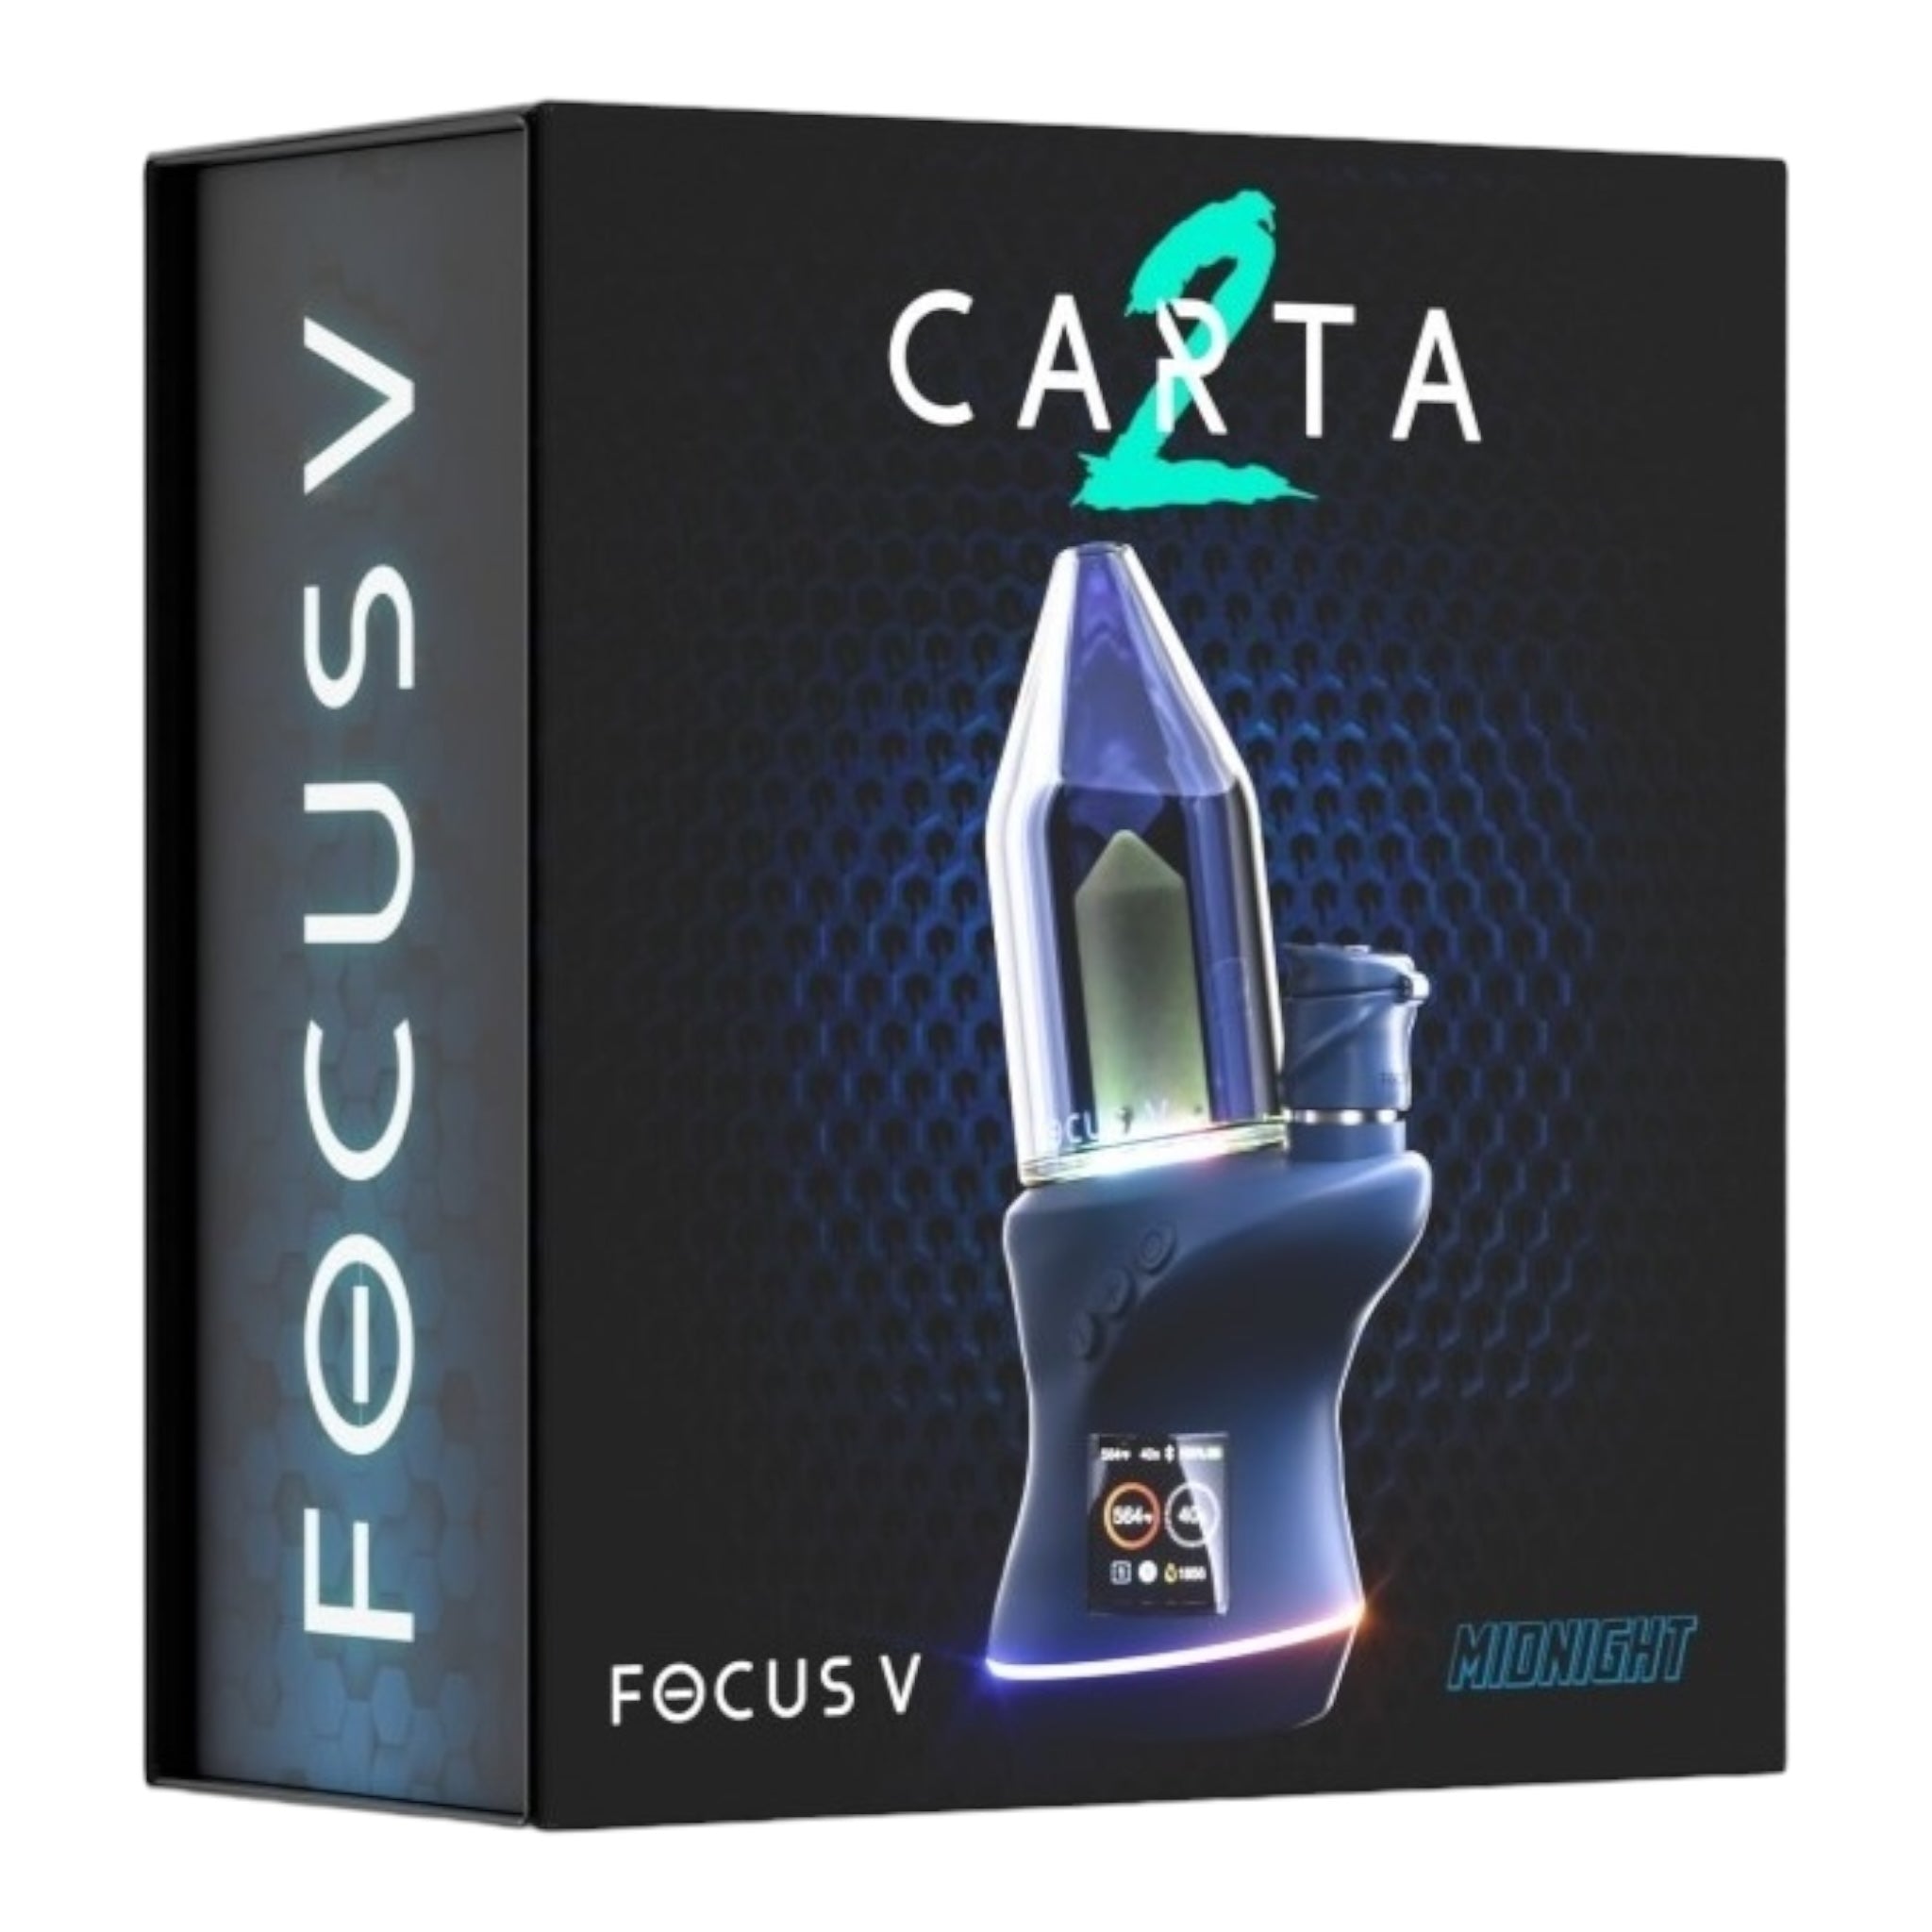 Focus V - CARTA 2 - Portable Dry Herb & Wax Oil Vaporizer - Midnight